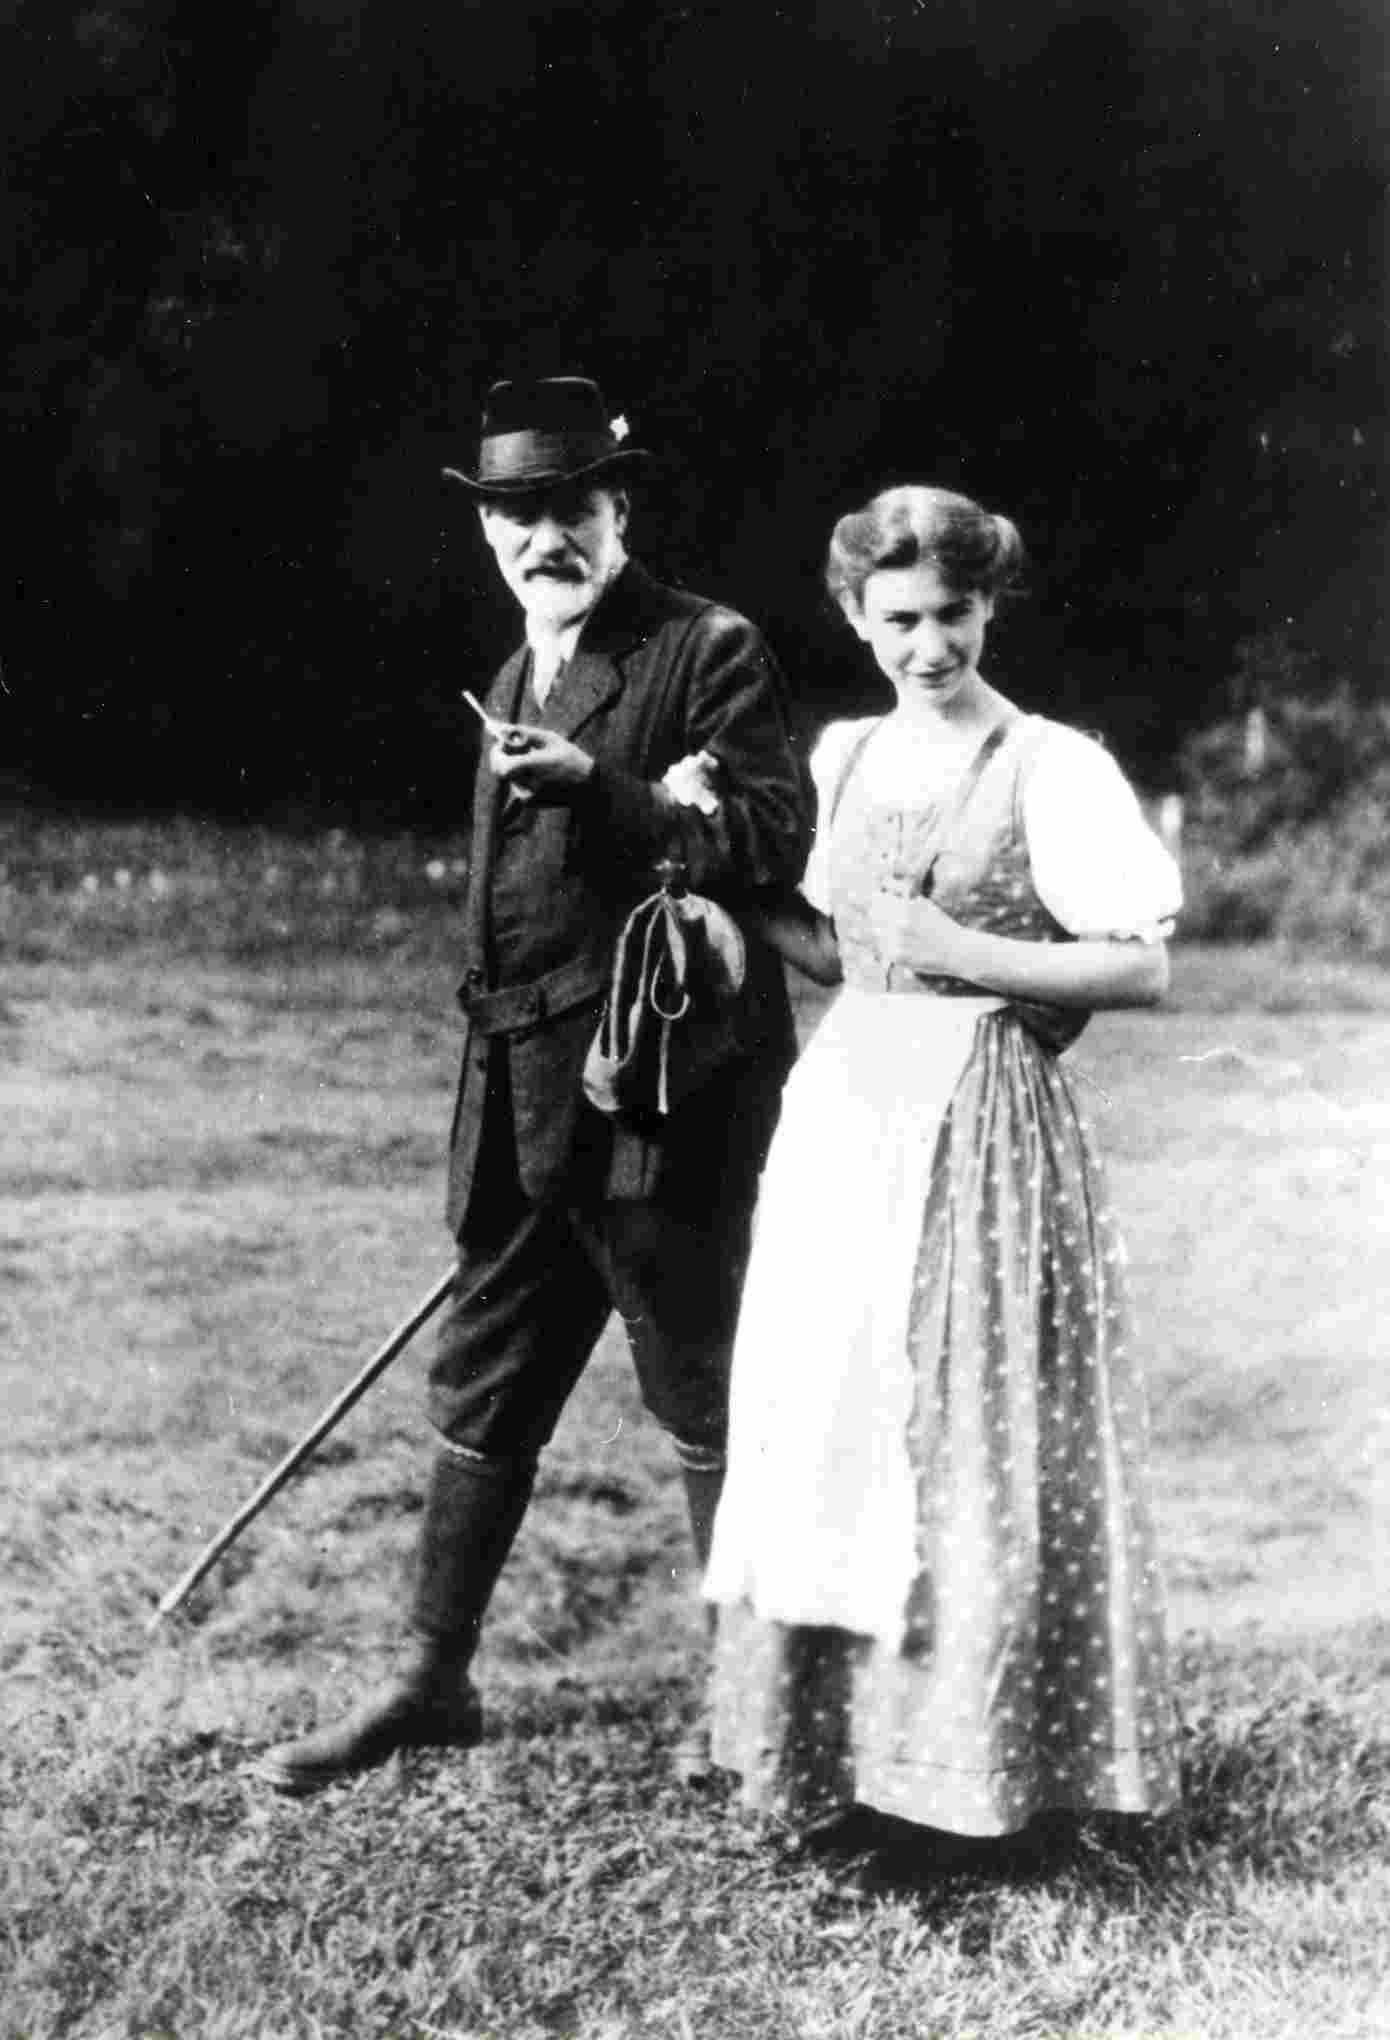 Sigmund Freud and Anna Freud in the Dolomites (1913)